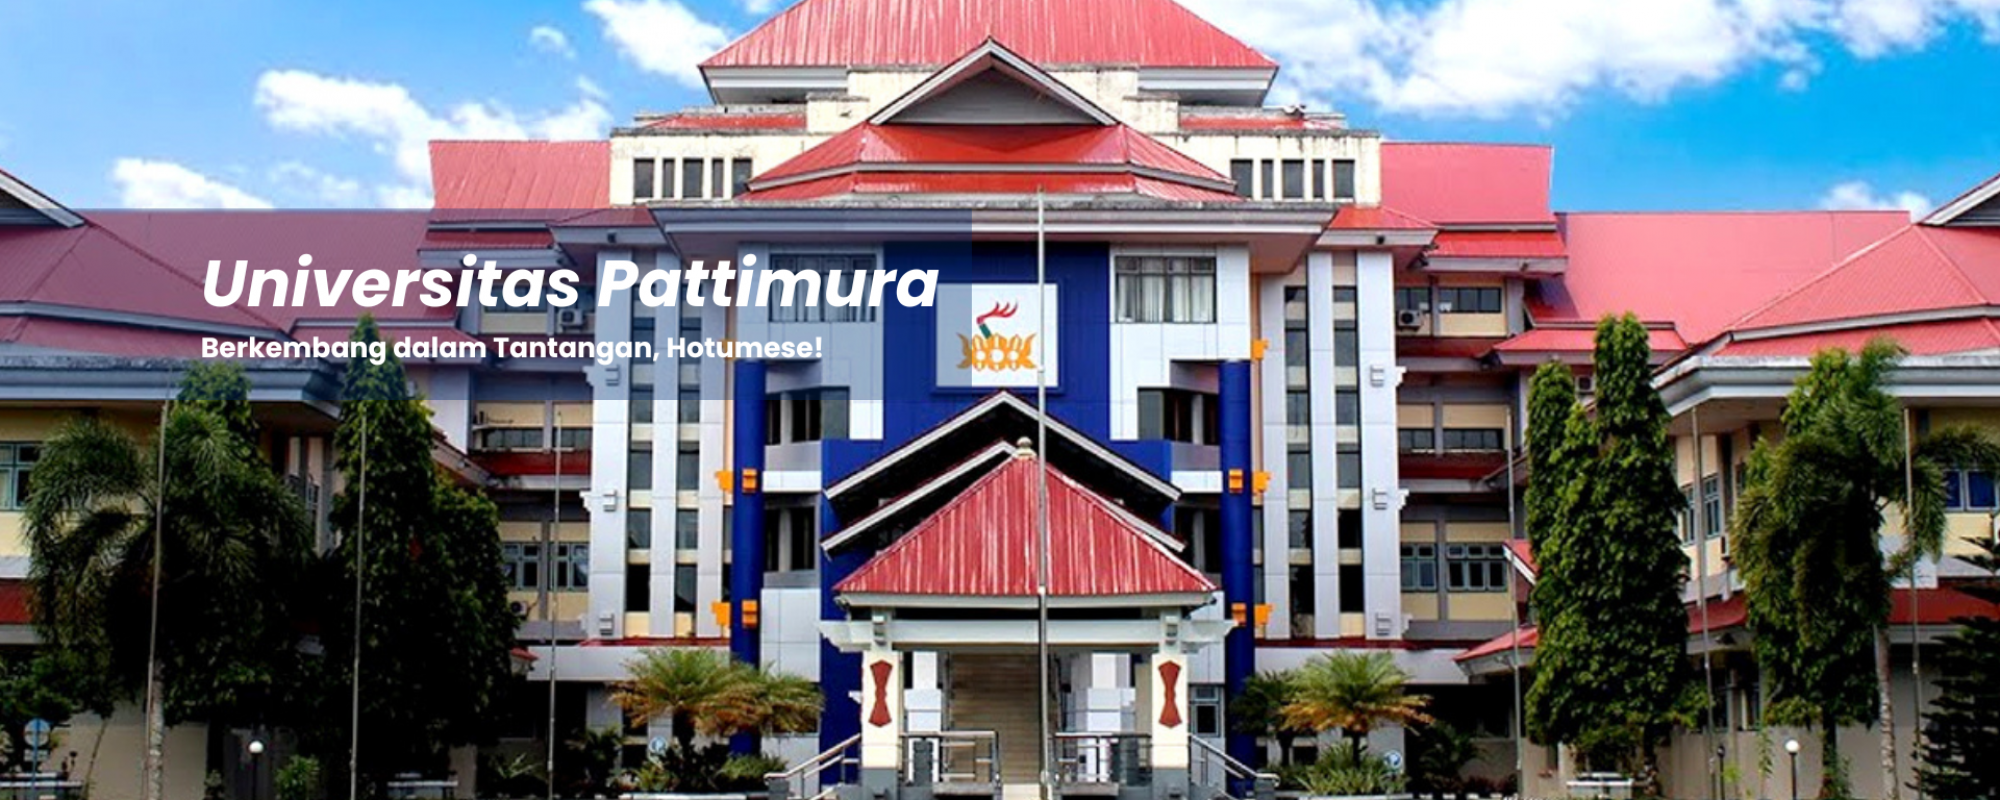 Universitas Pattimura (1)